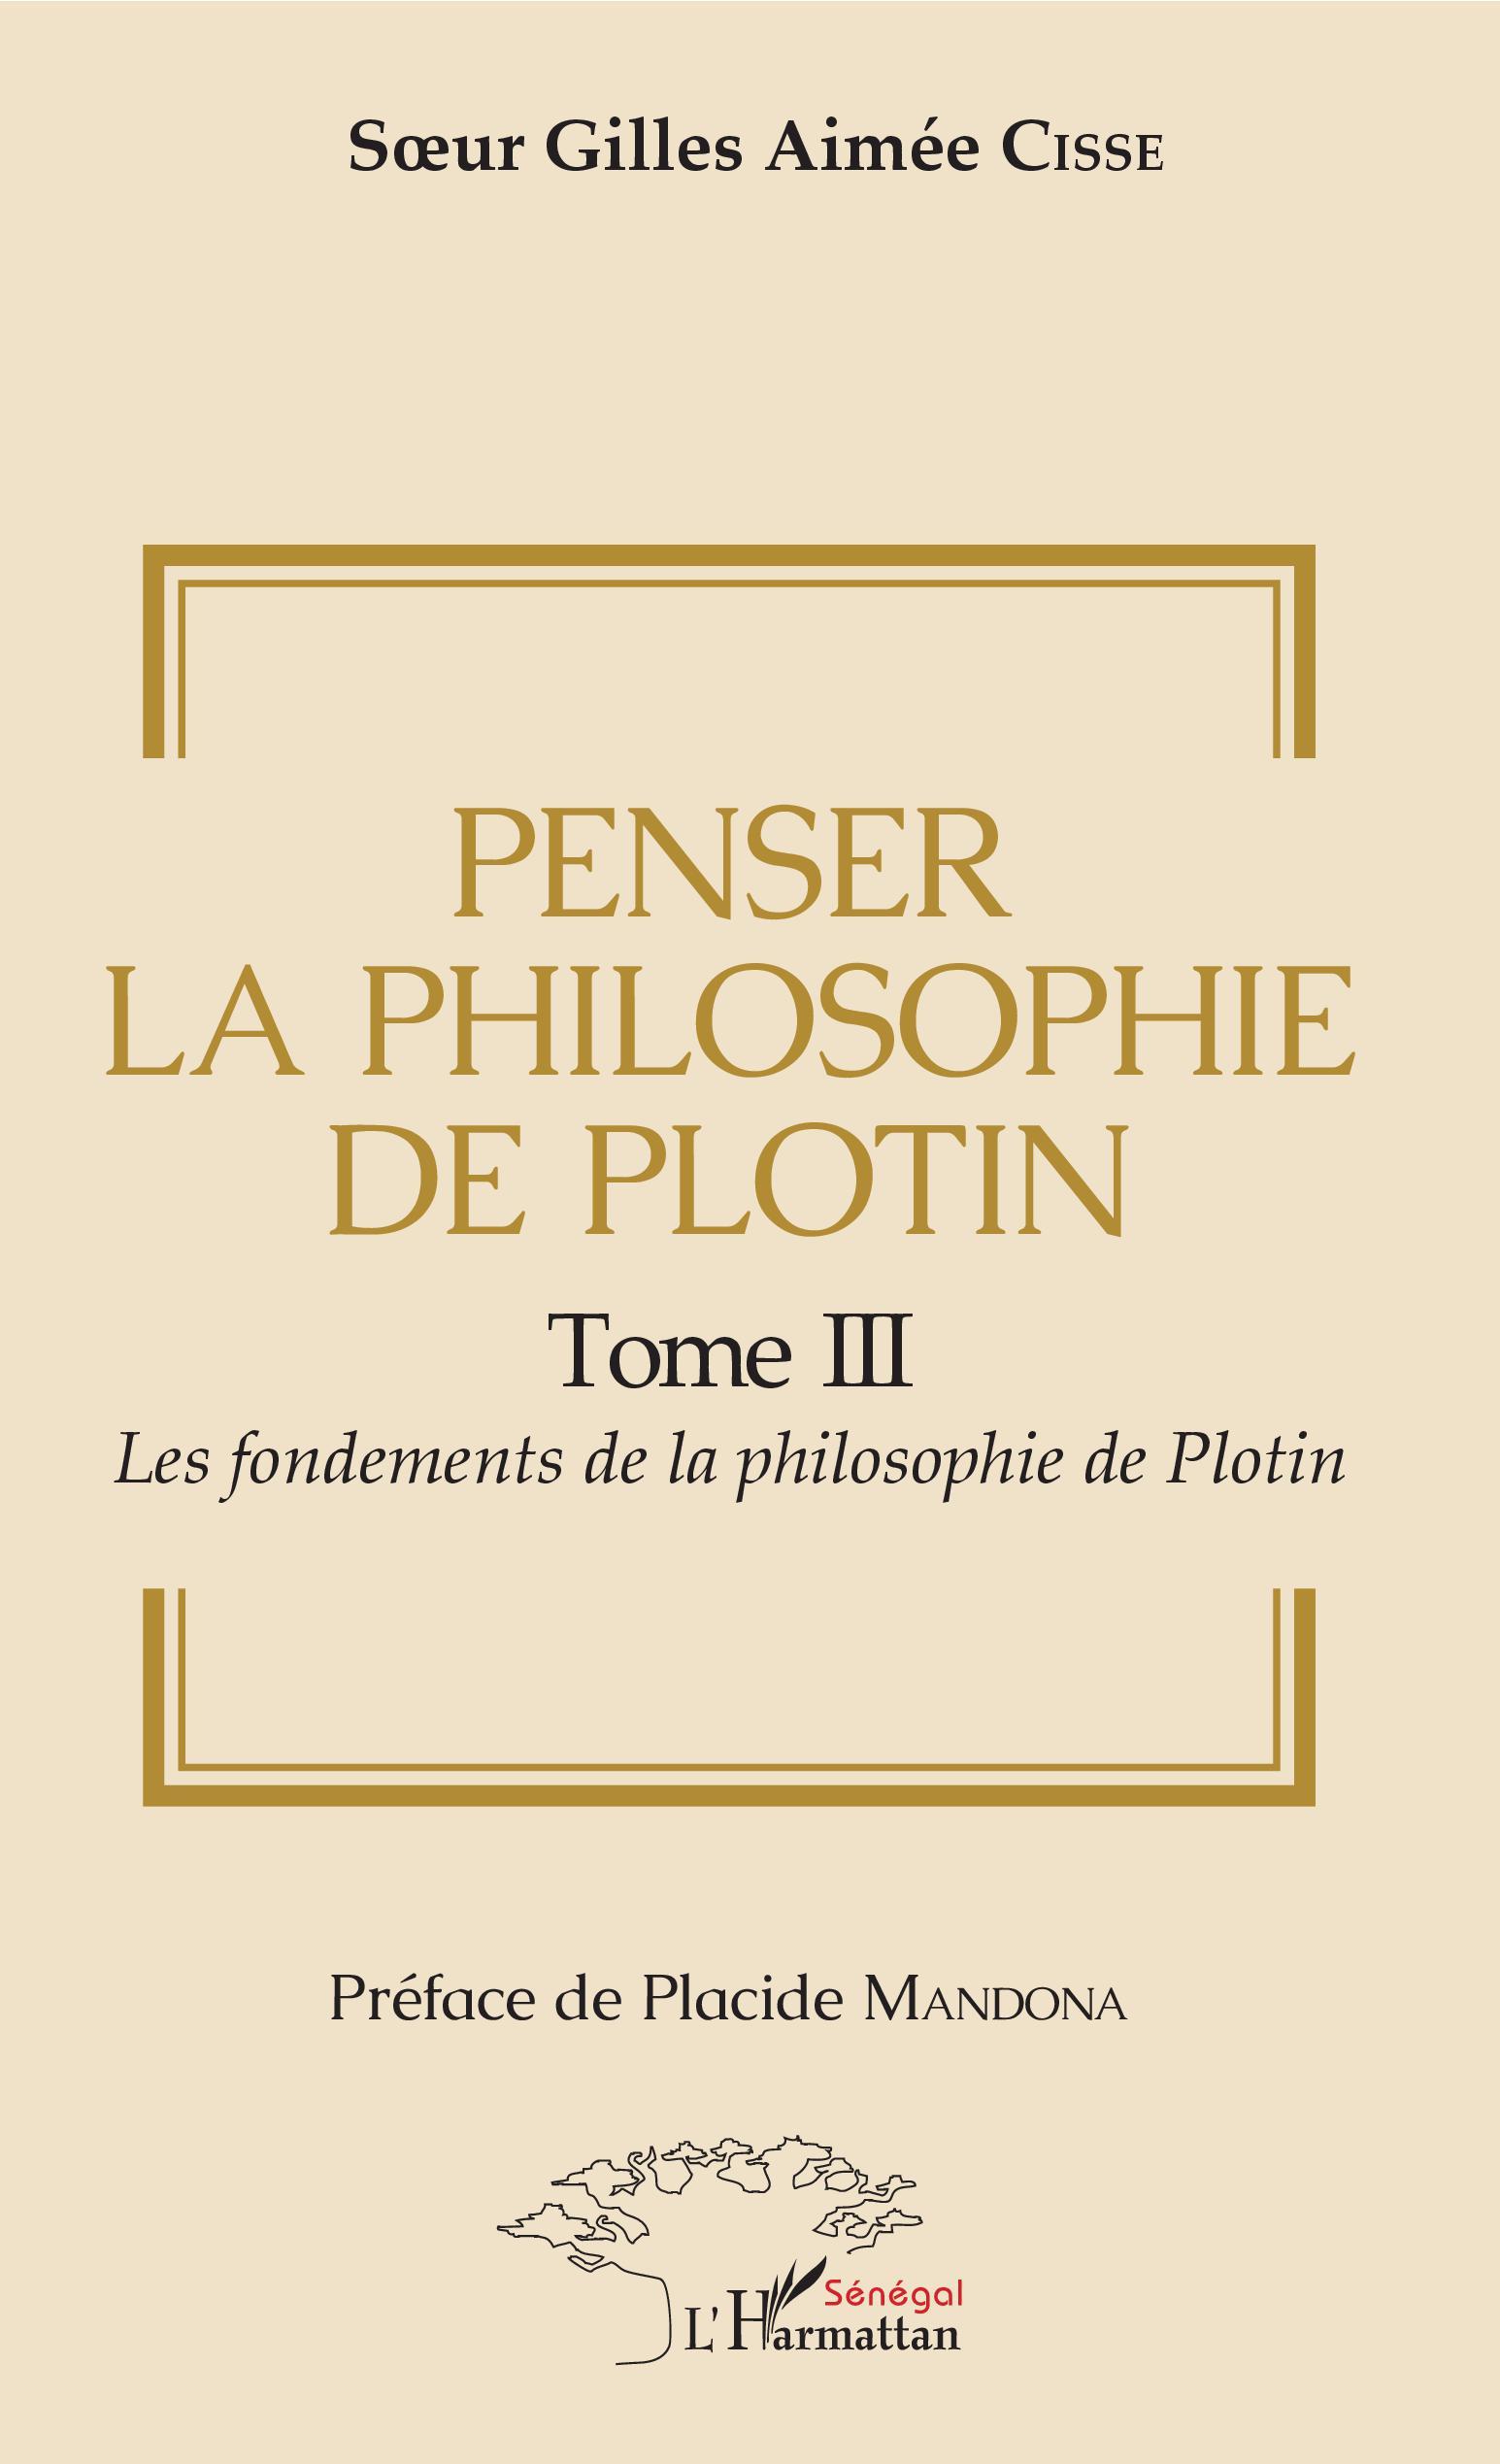 Penser la philosophie de Plotin Tome III, Les fondements de la philosophie de Plotin (9782343172408-front-cover)